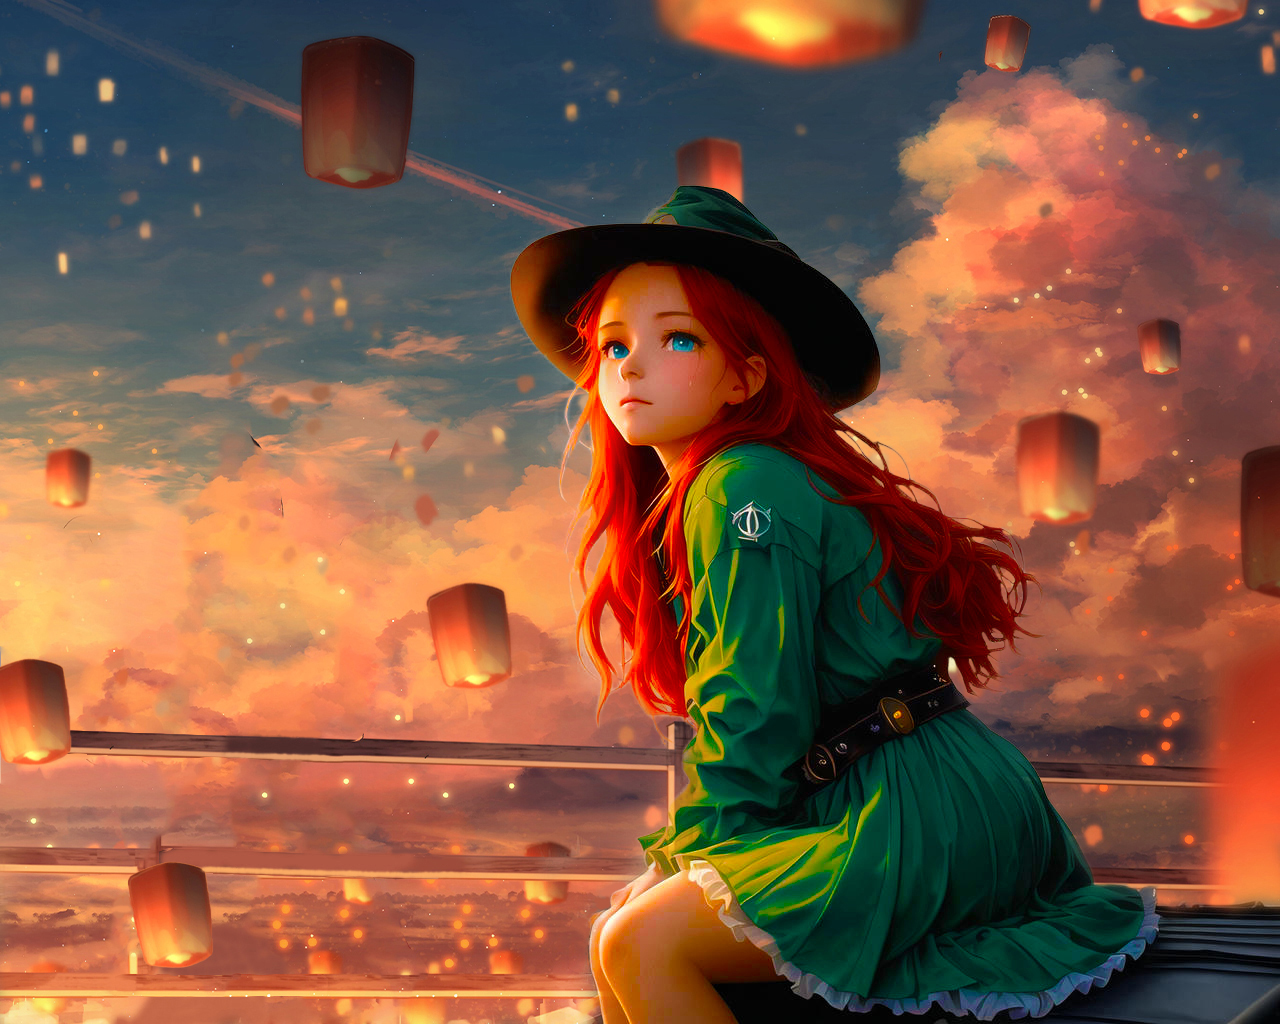 Anime Girls Artwork Redhead Turquoise Eyes Hat Looking Away Sky Lanterns Clouds Sky Long Hair Sunset 1280x1024